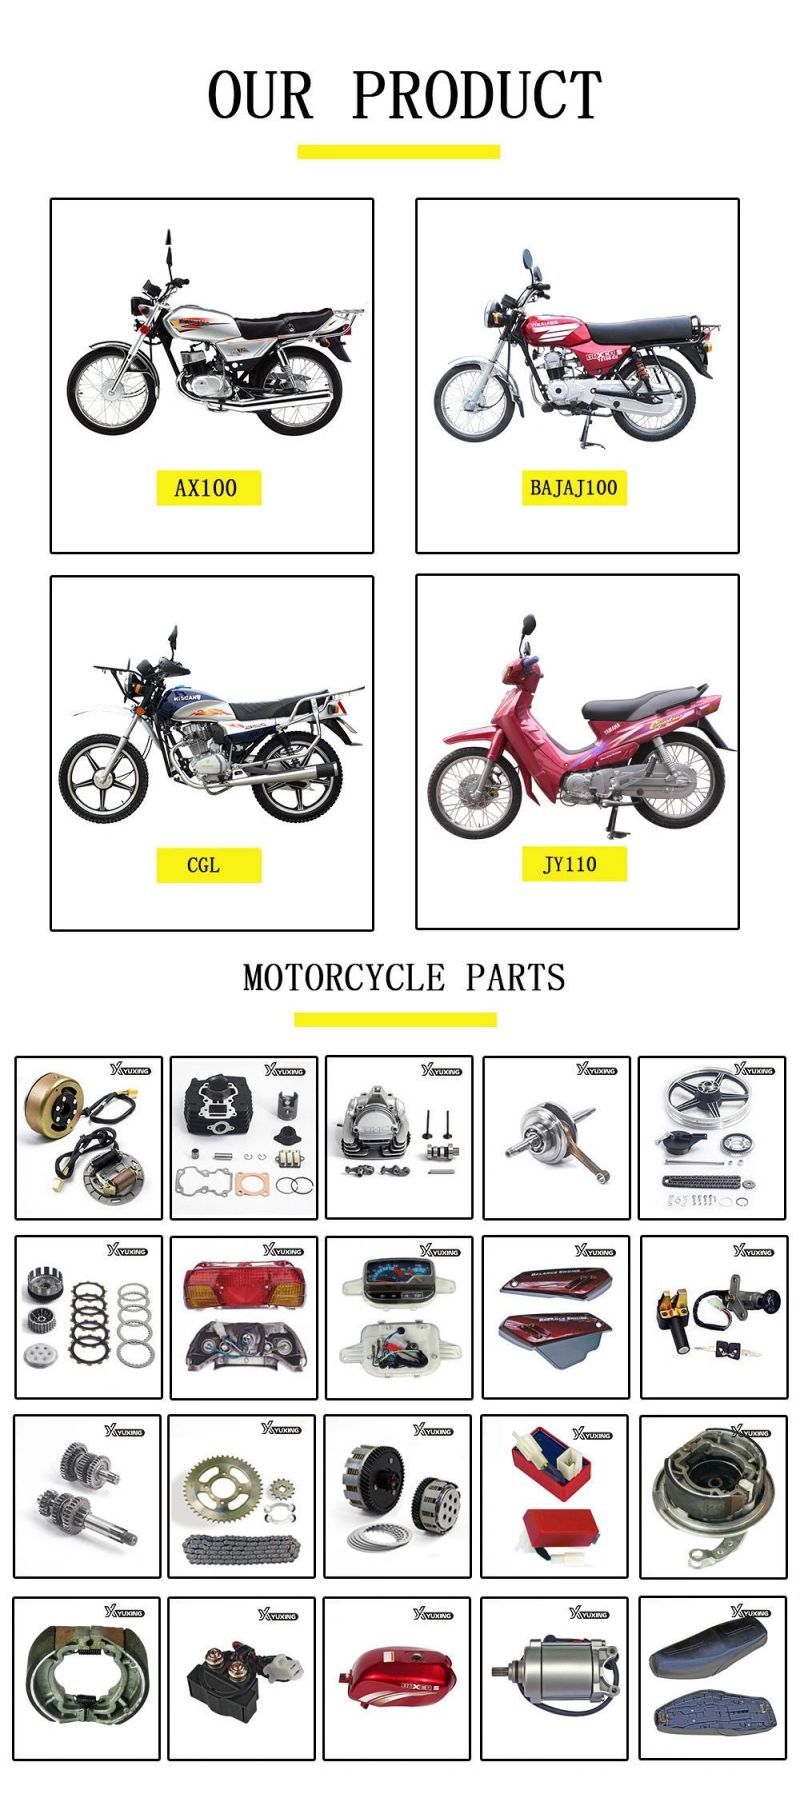 Otorcycle Cylinder Head, Carburetor, Camshaft, Clutch, Engine, Motorcycle Parts